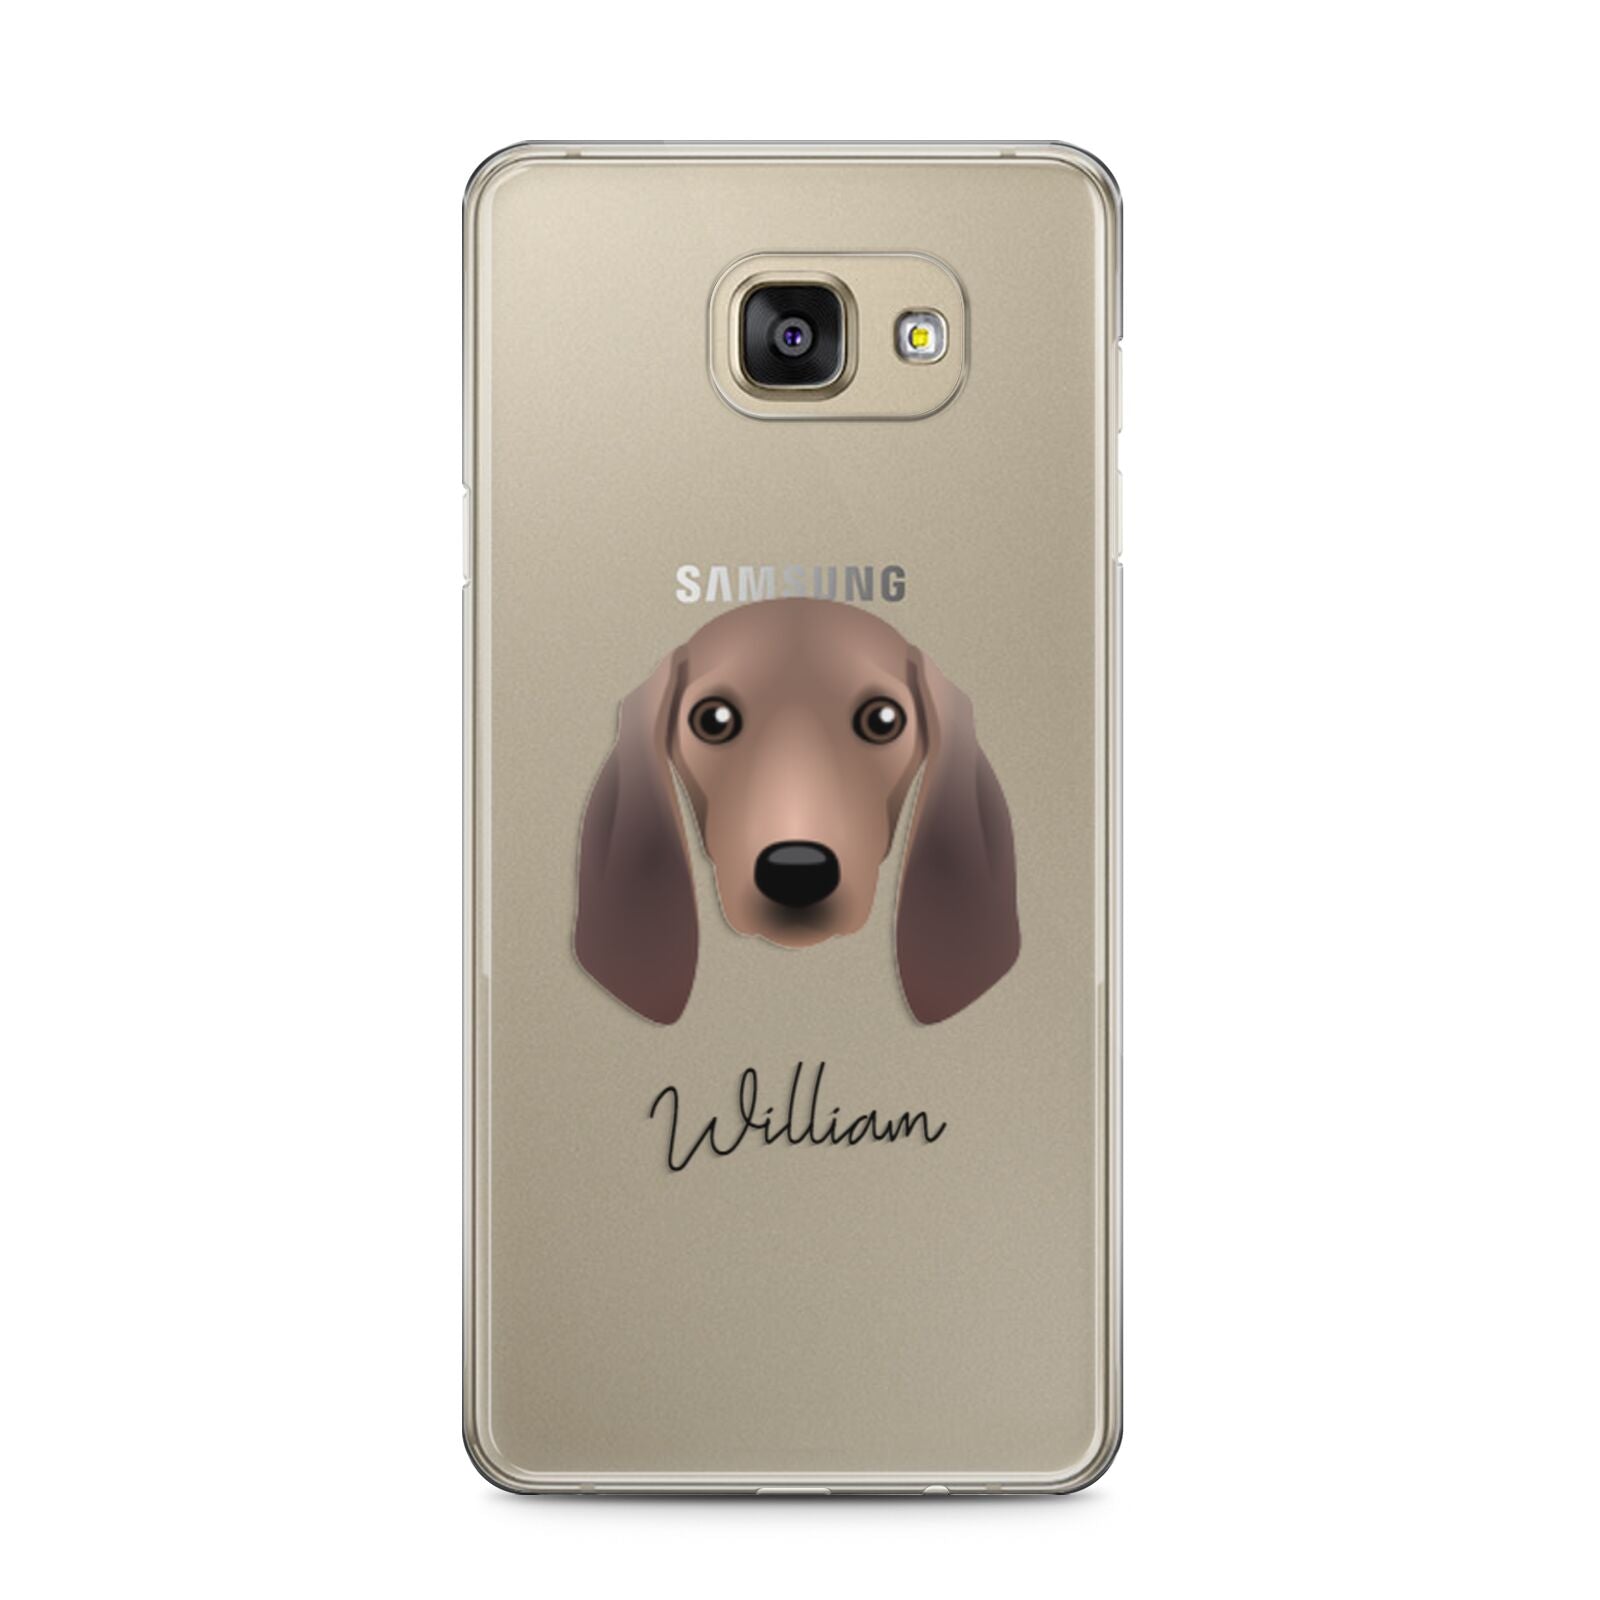 Segugio Italiano Personalised Samsung Galaxy A5 2016 Case on gold phone